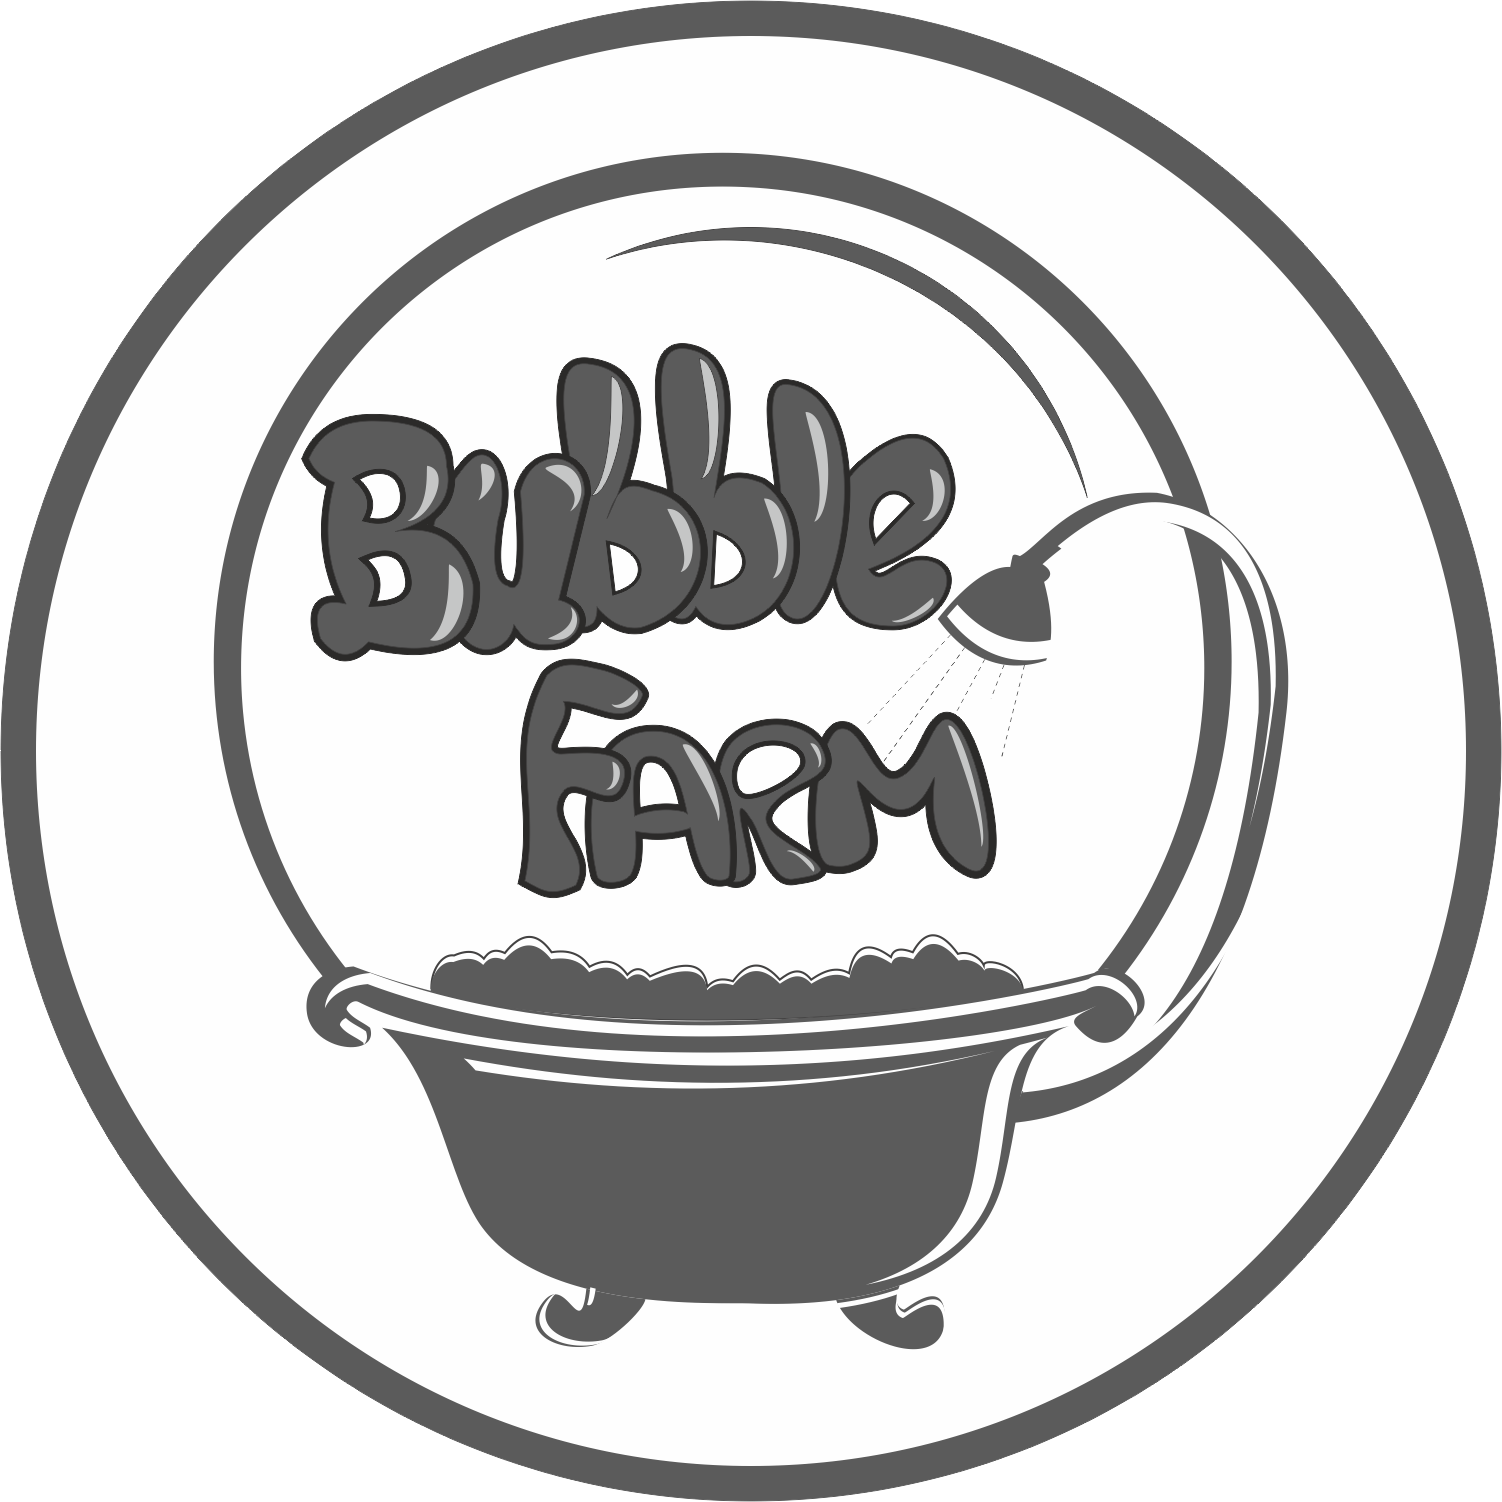 Bubblefarm